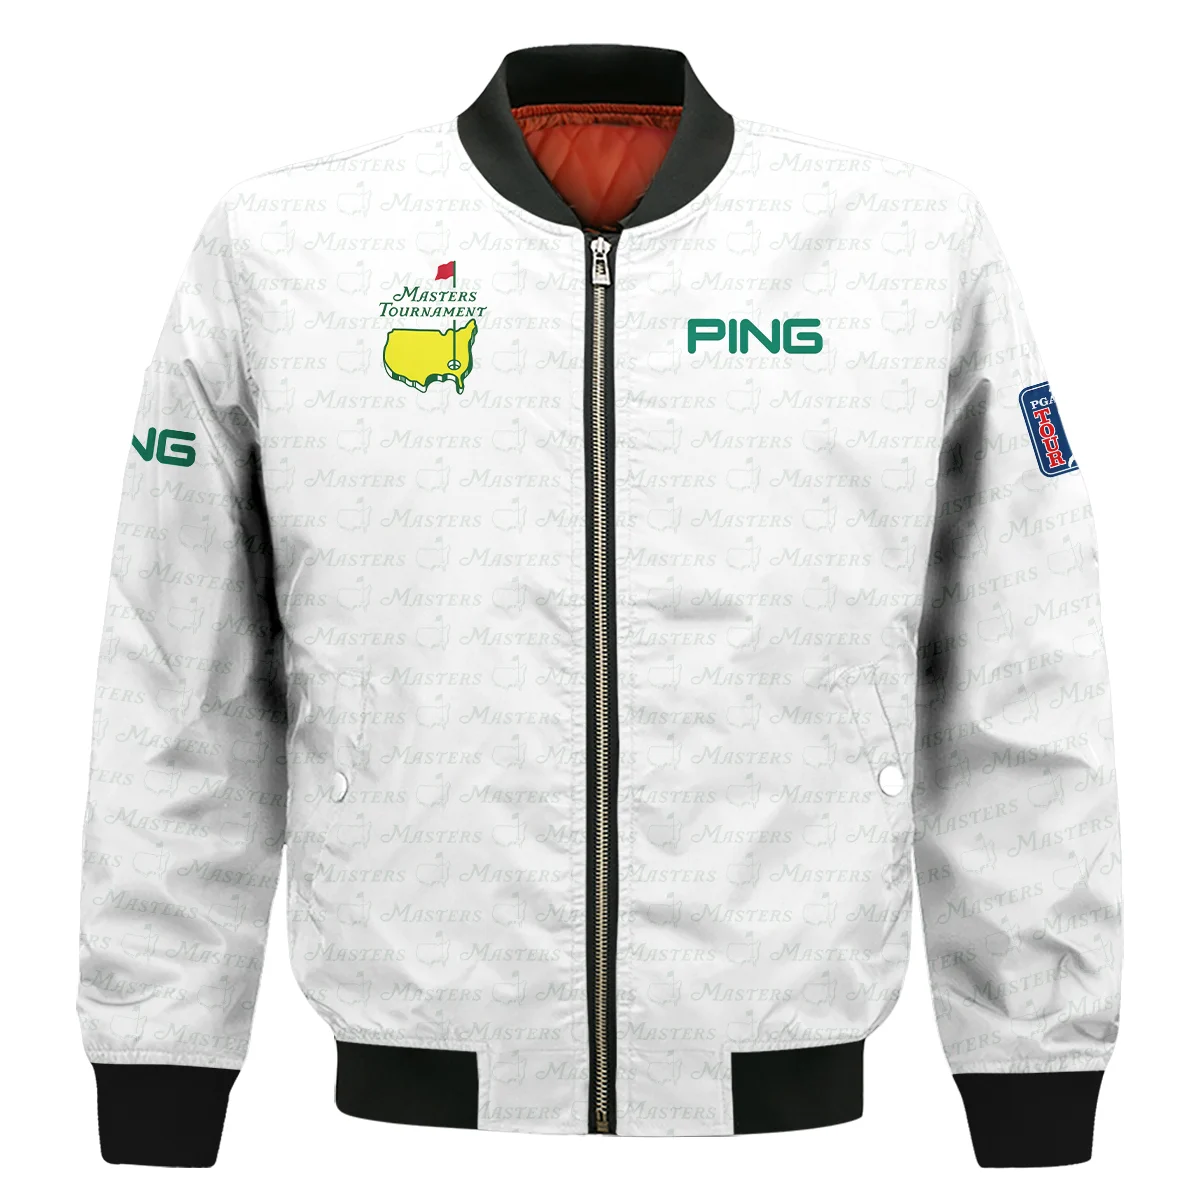 Pattern Masters Tournament Ping Bomber Jacket White Green Sport Love Bomber Jacket GBJ1366